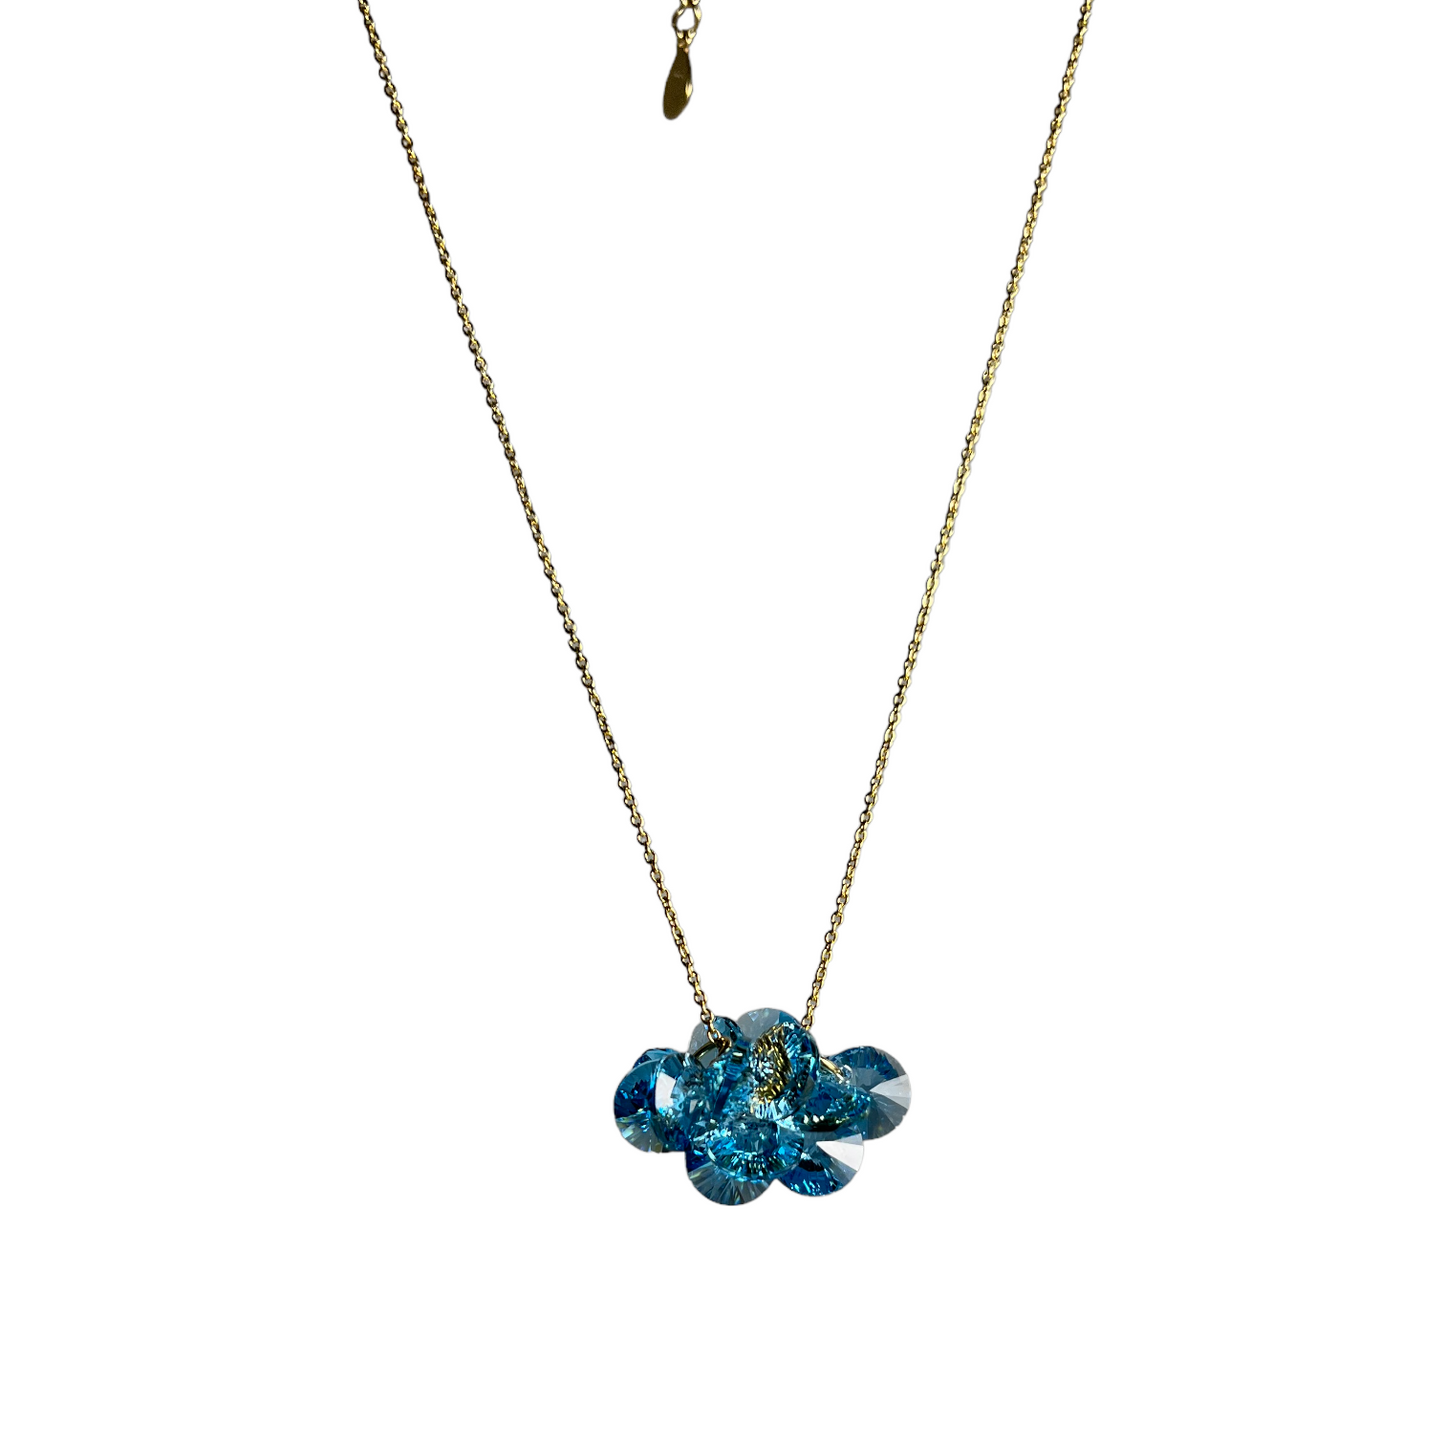 Collier avec cristaux Swarovski, bleu aquamarine, 202, argent doré, MARGOT